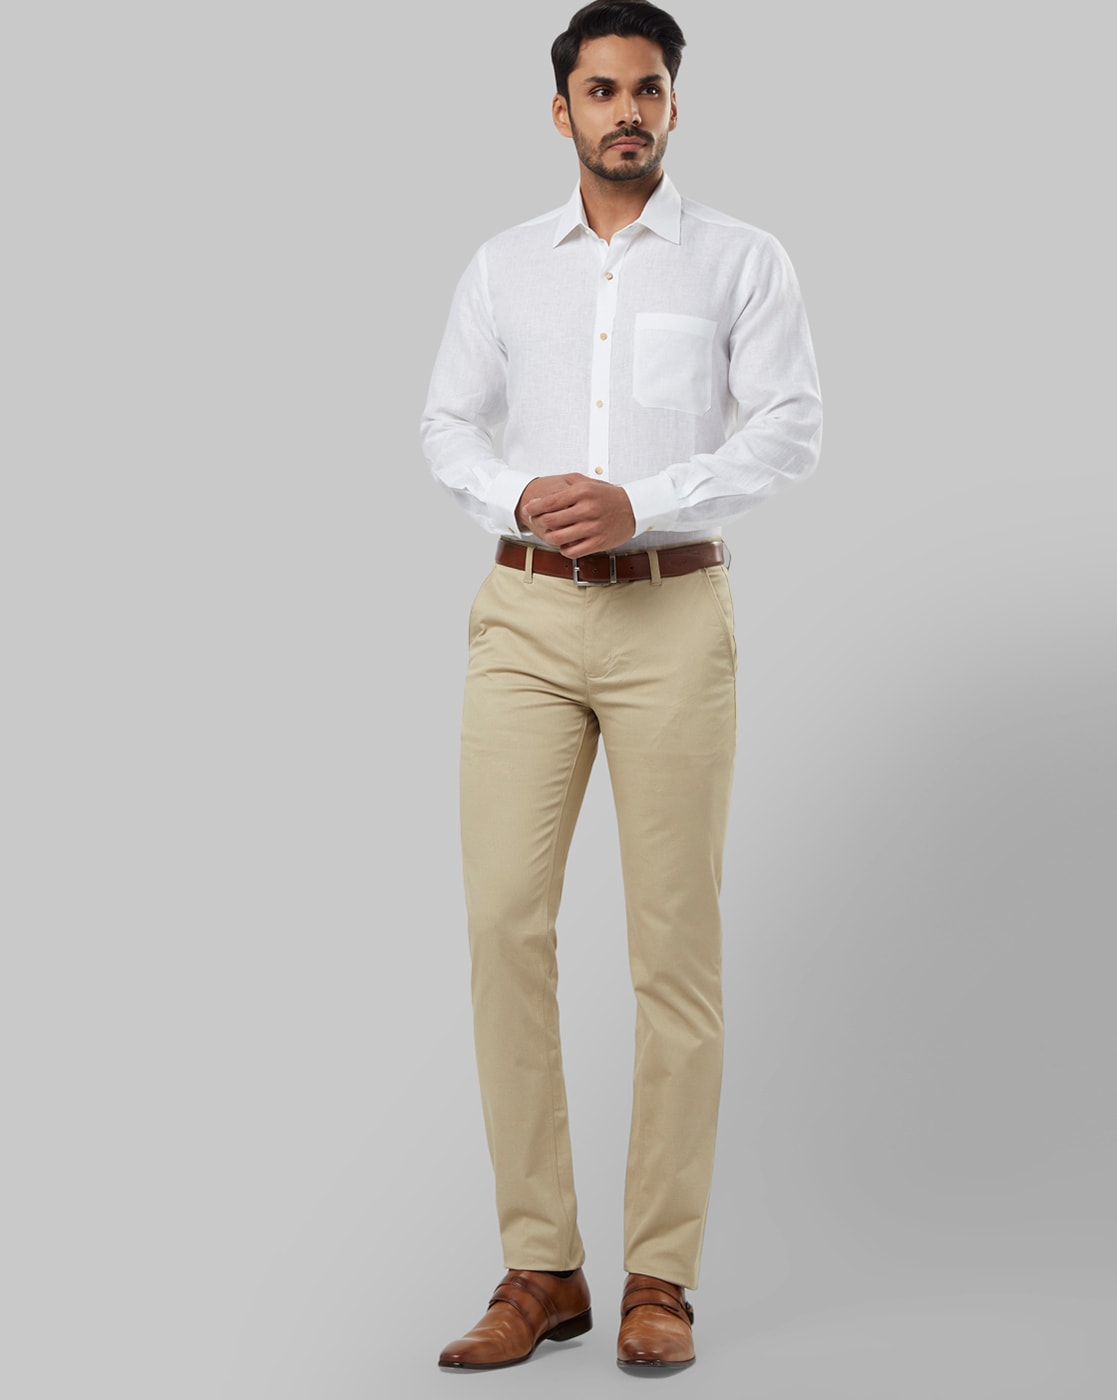 white shirt, beige pants | Fashion, Bollywood fashion, Fashion outfits